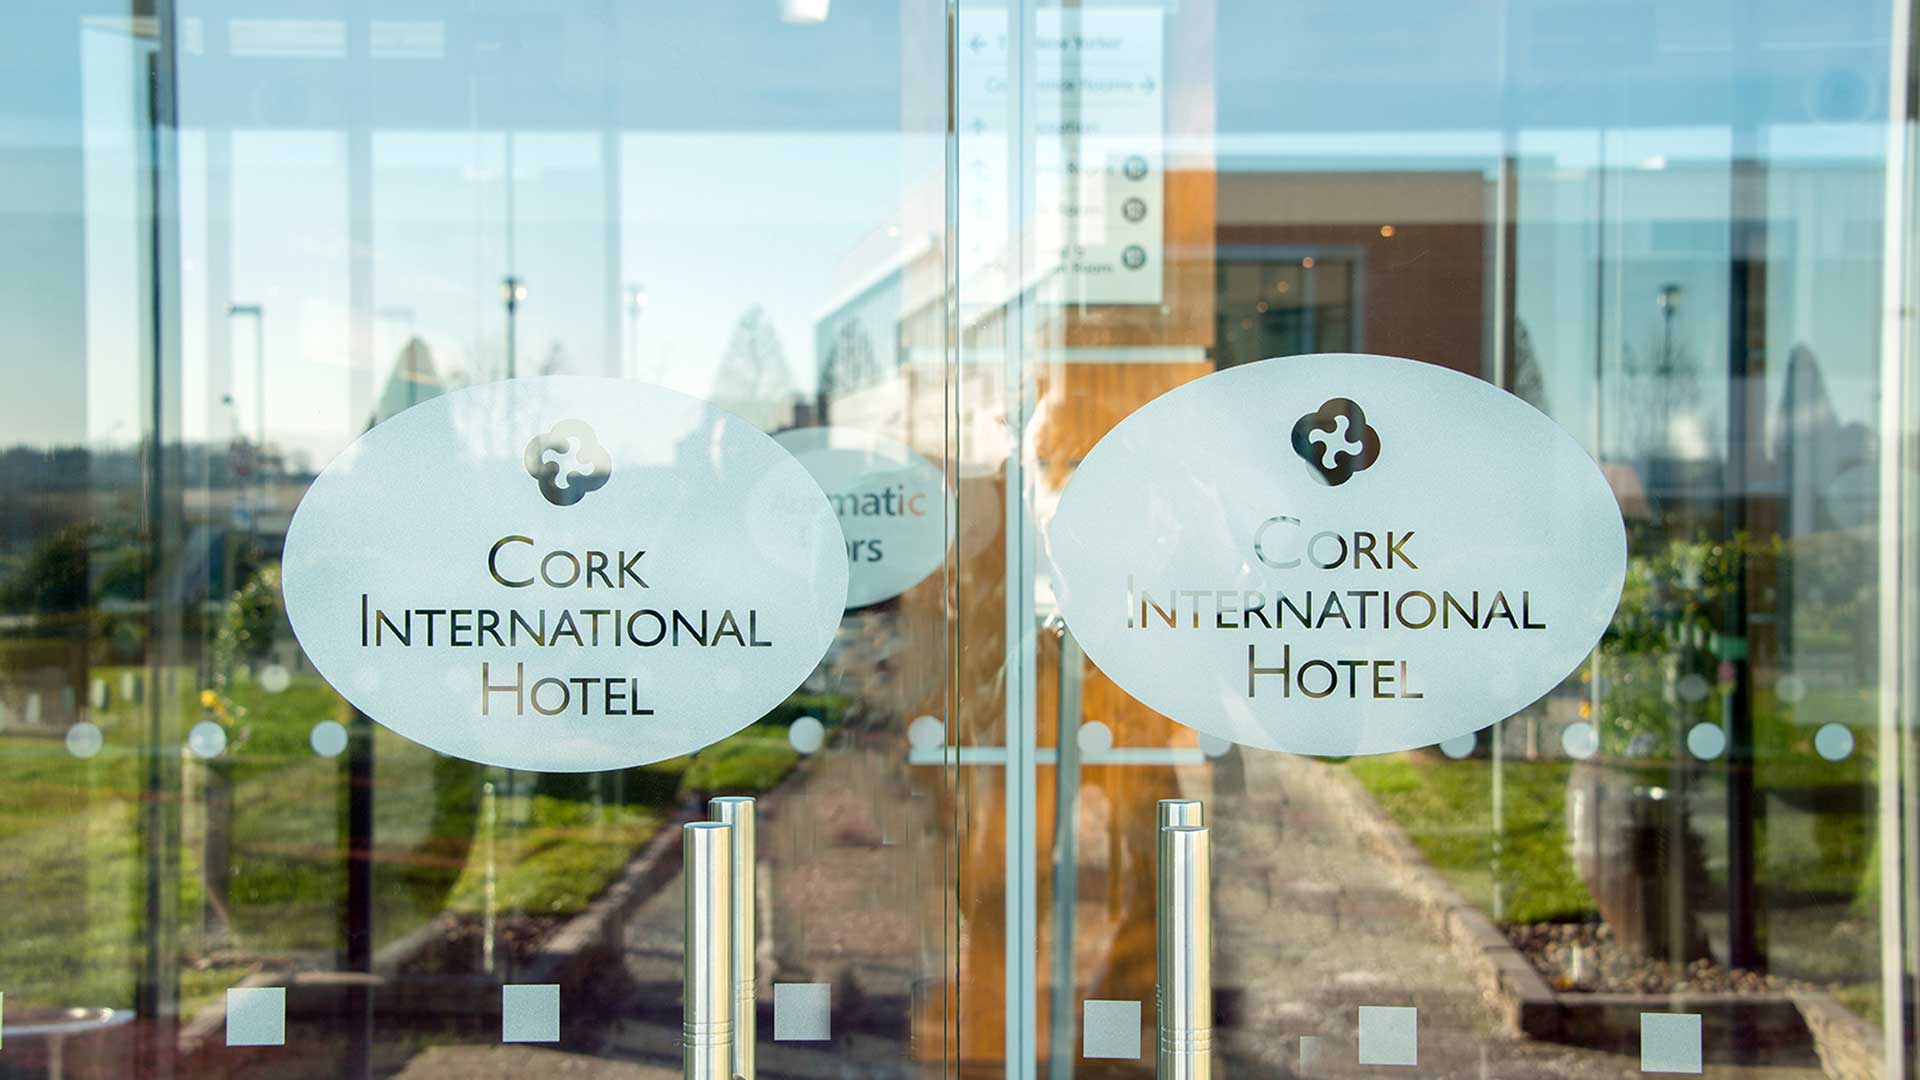 Glass doors to the Cork International Hotel